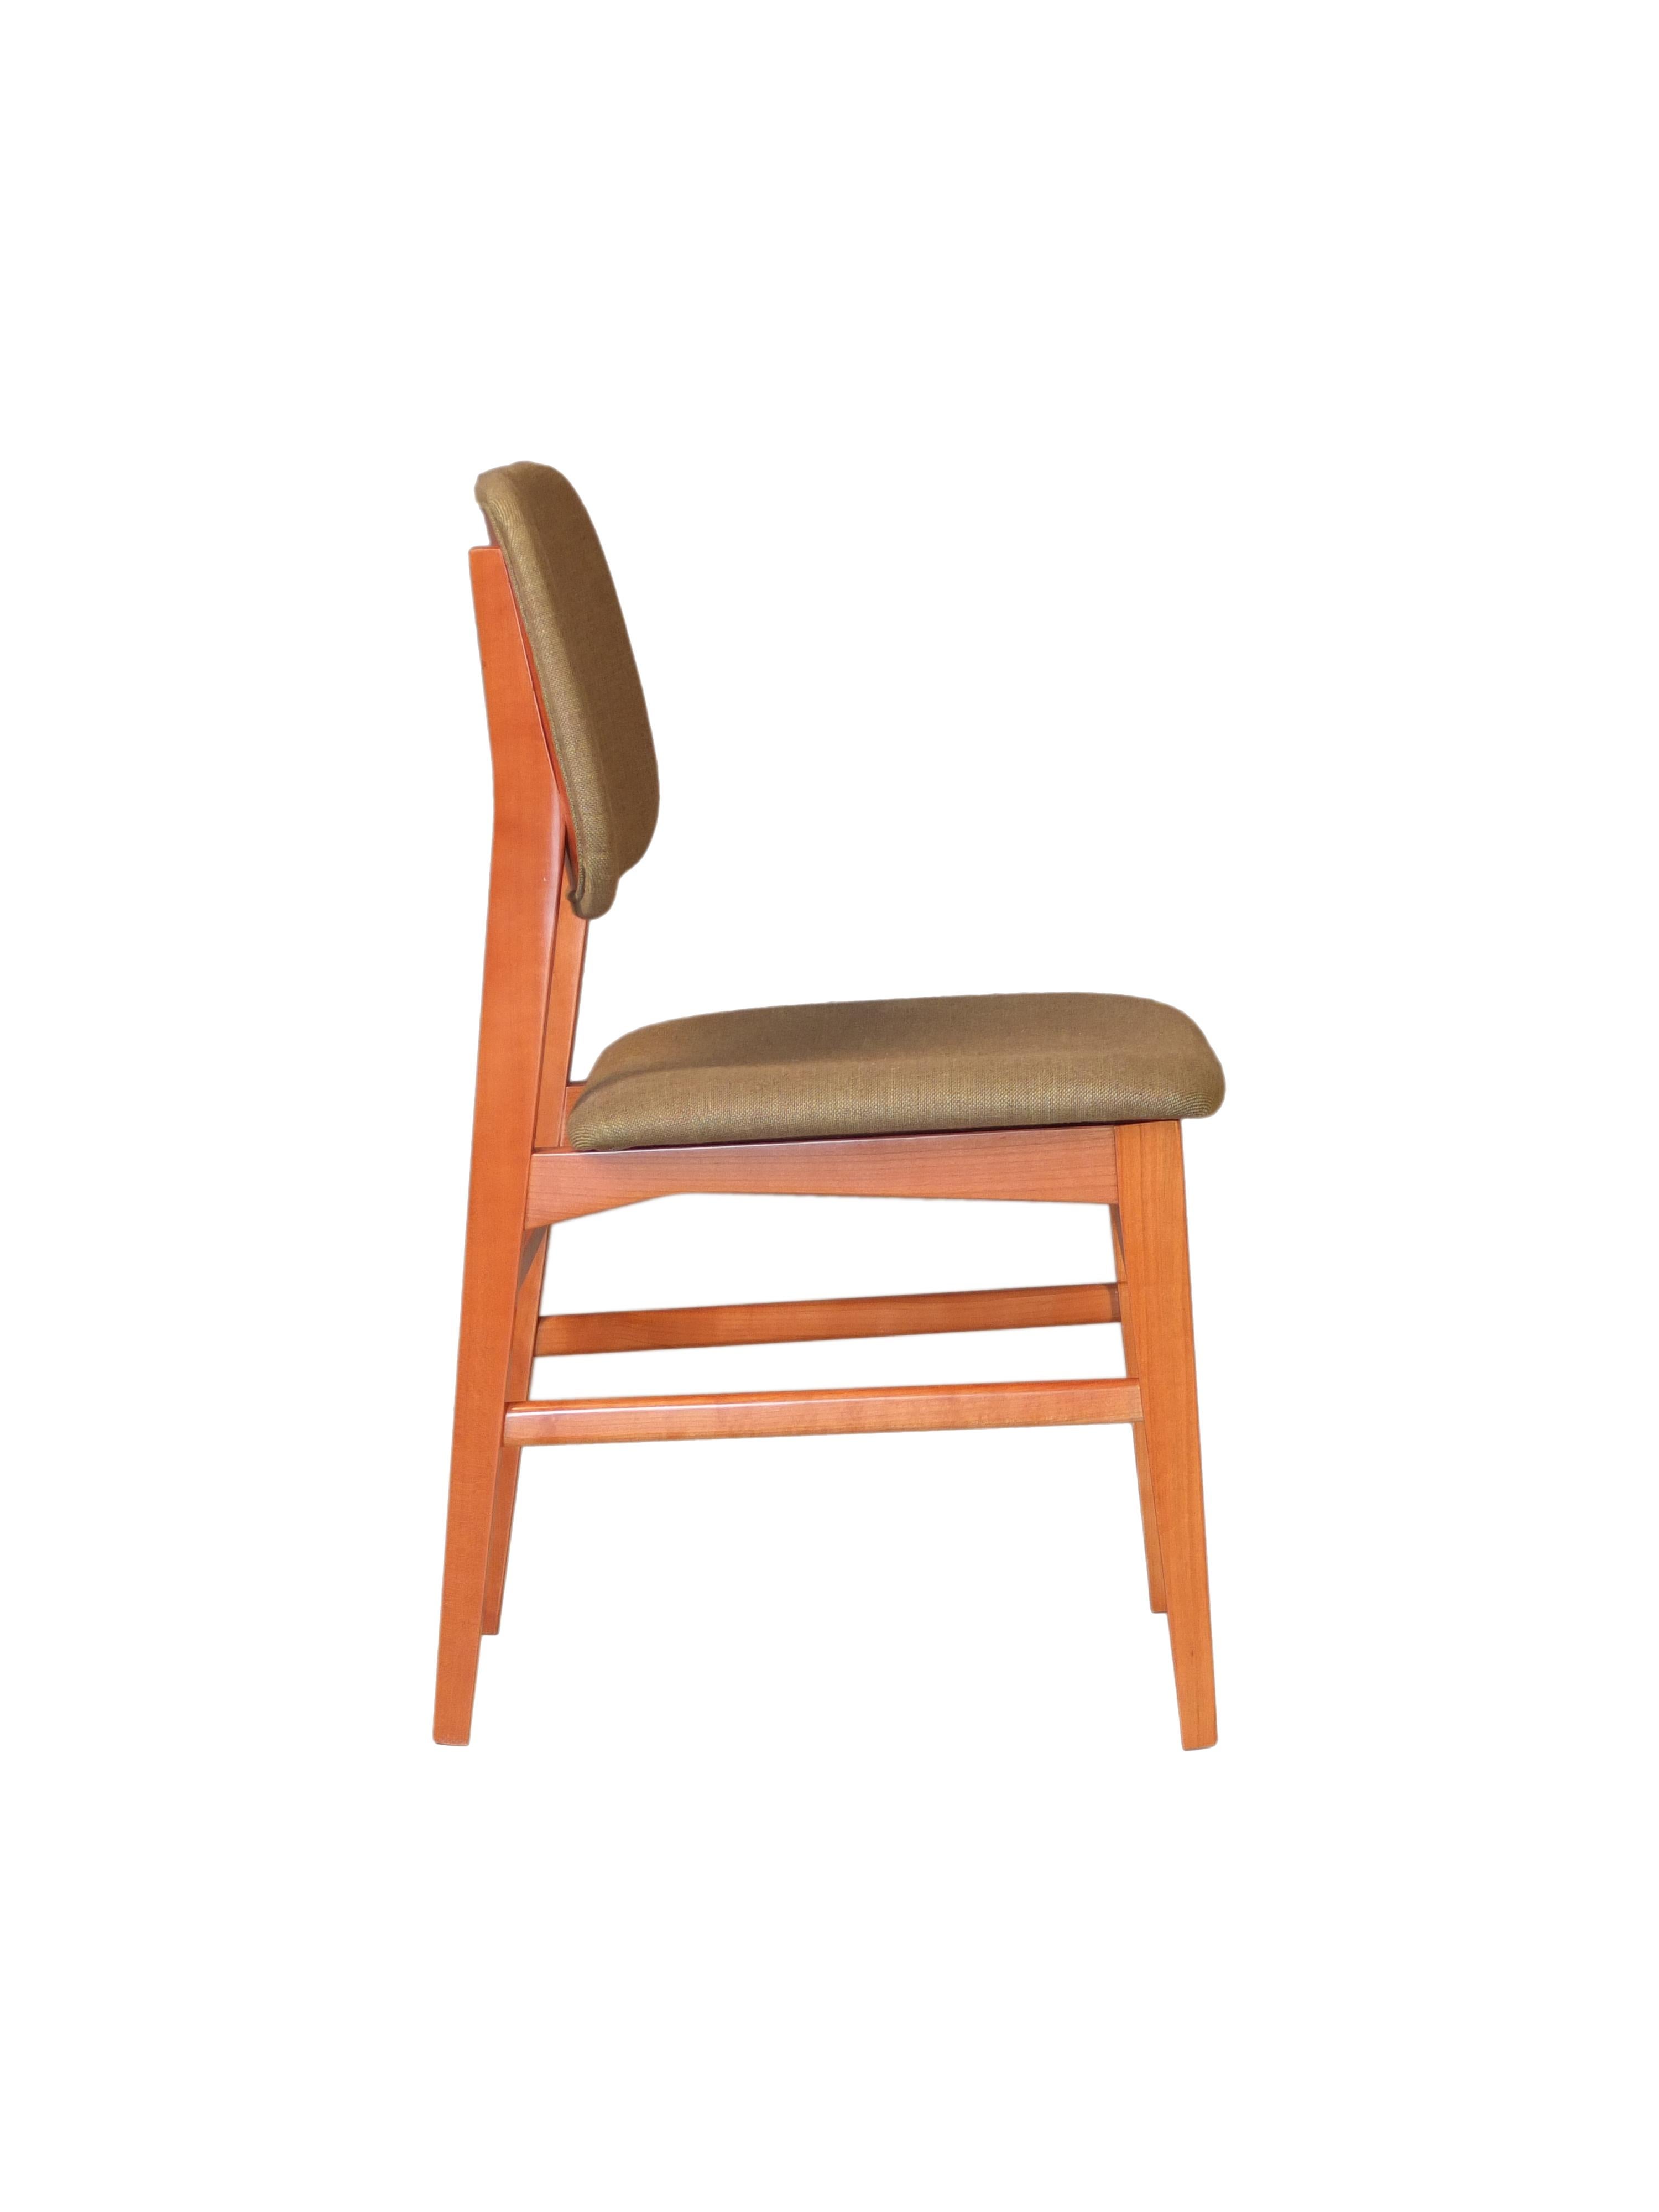 Contemporary Morelato, Savina Chair in Ash Wood